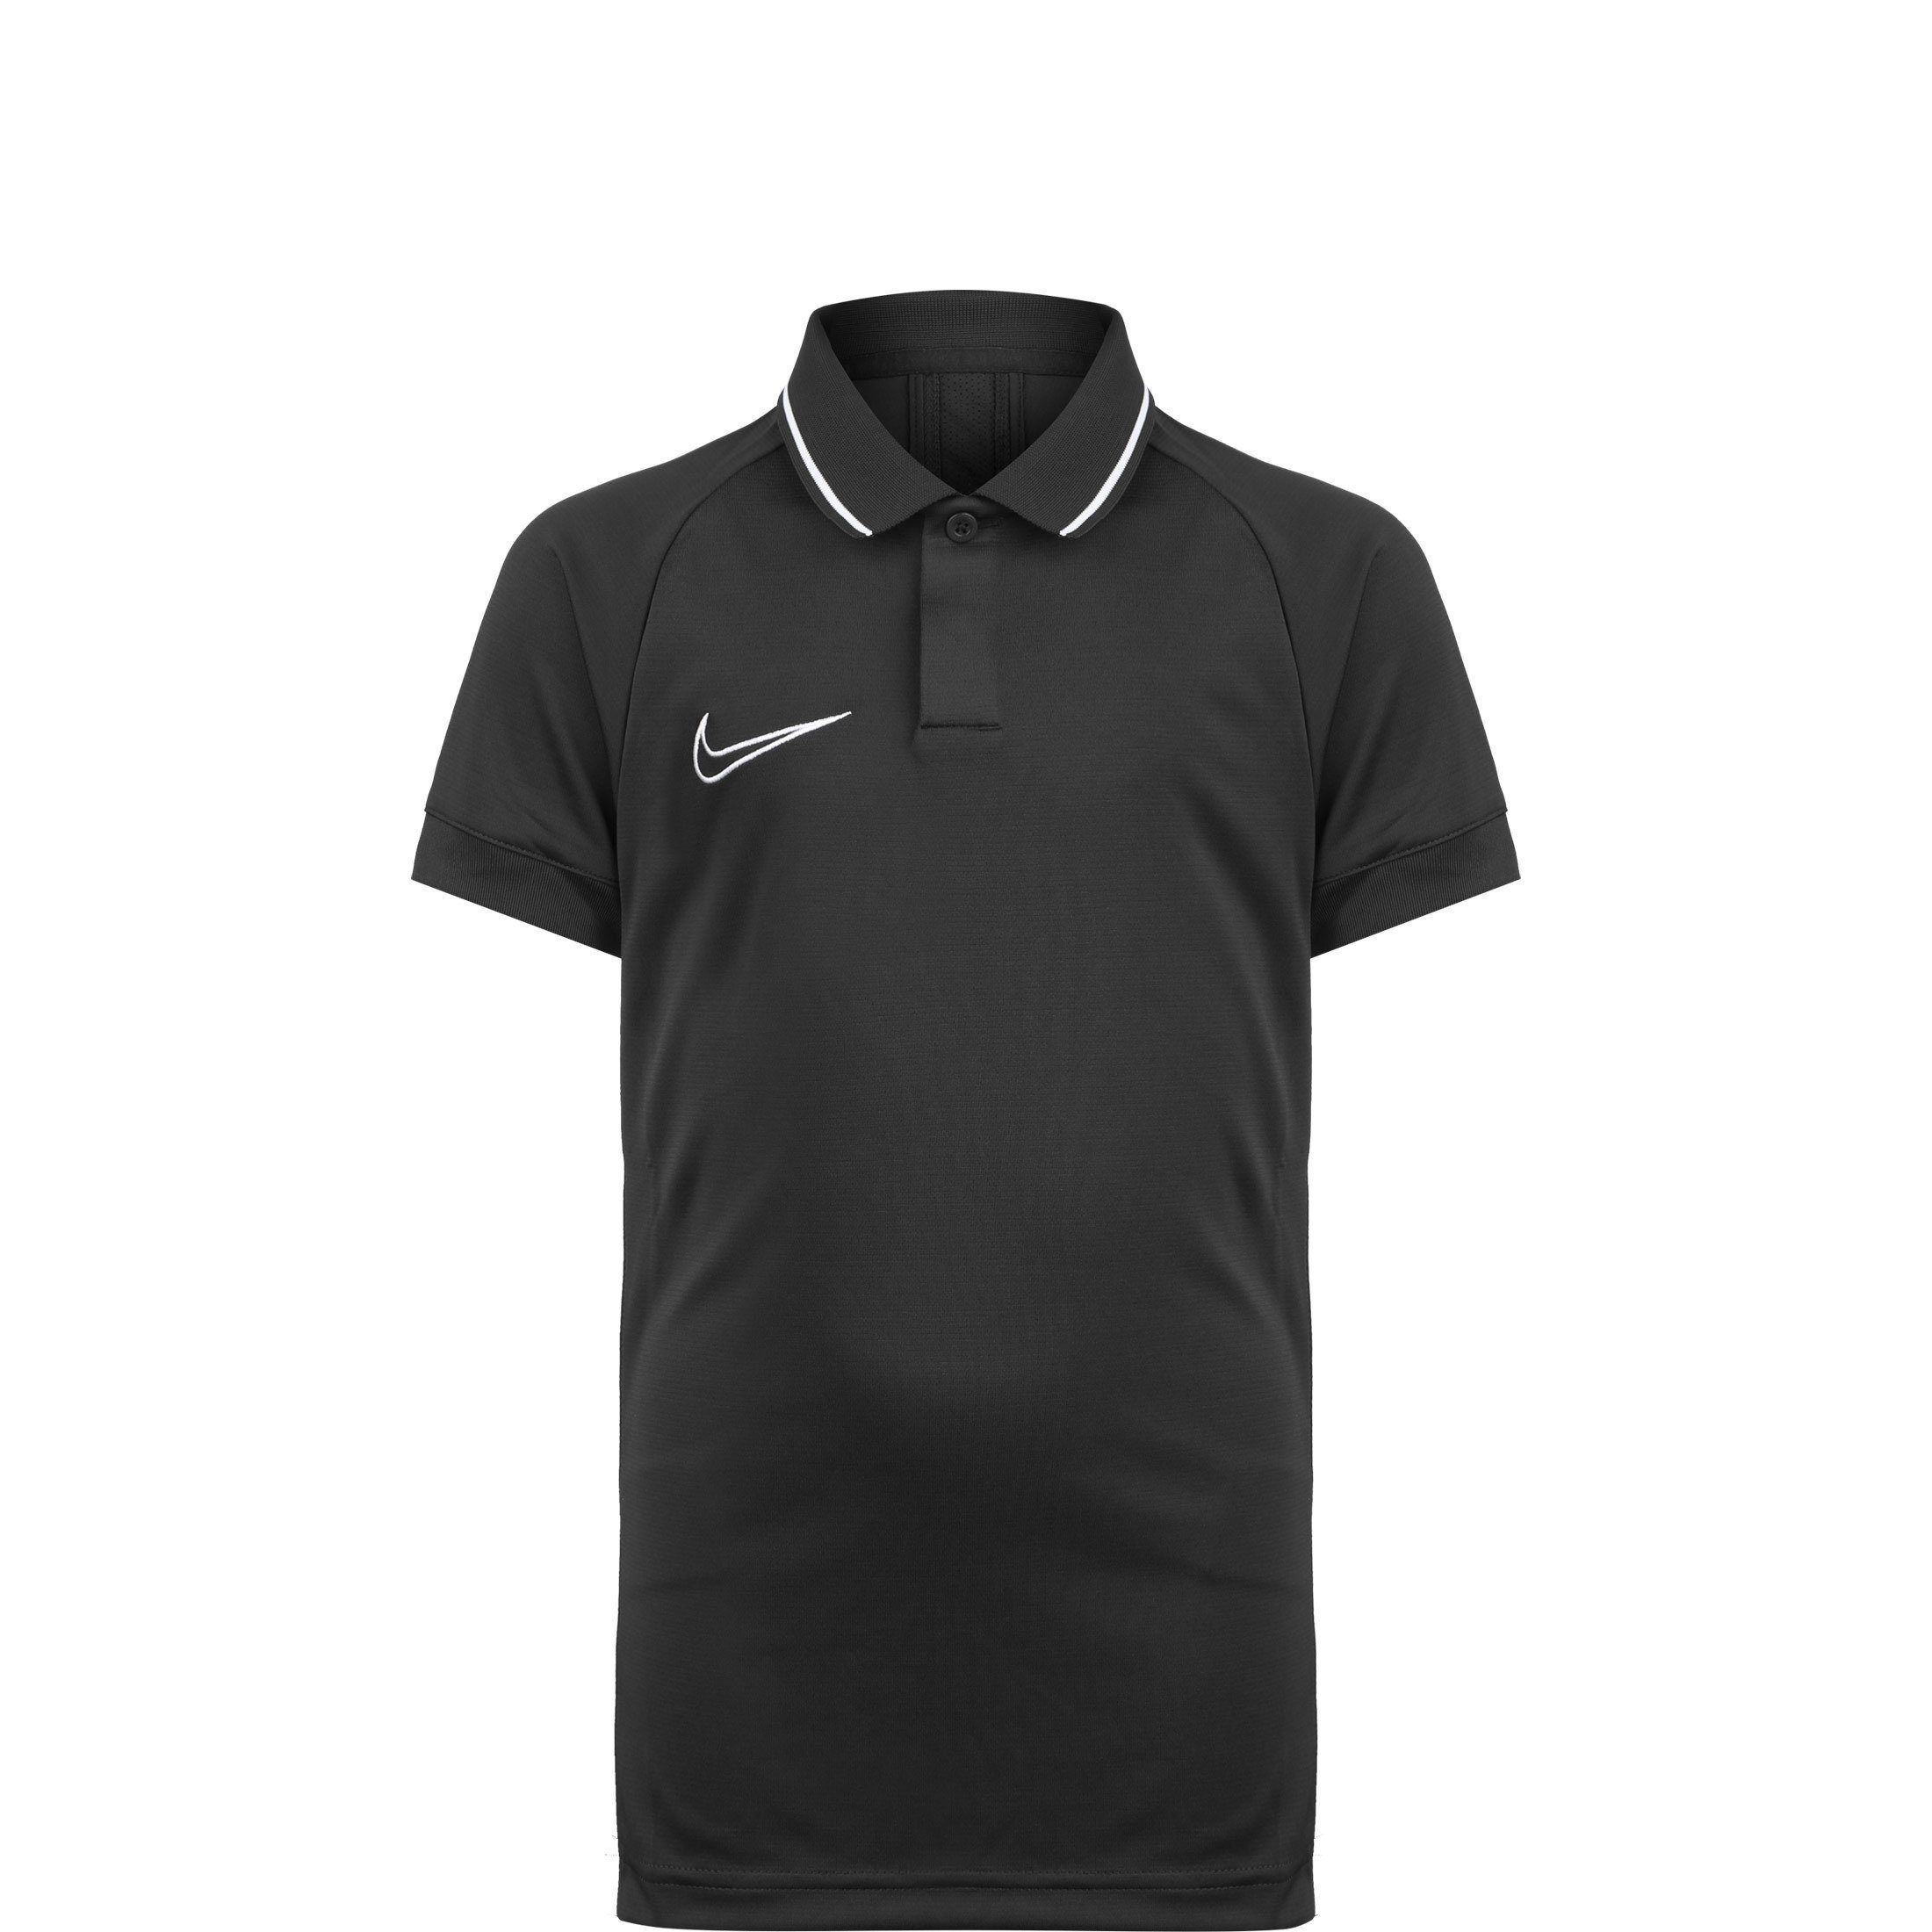 Nike Poloshirt »Dry Academy 19«, anthracite / white